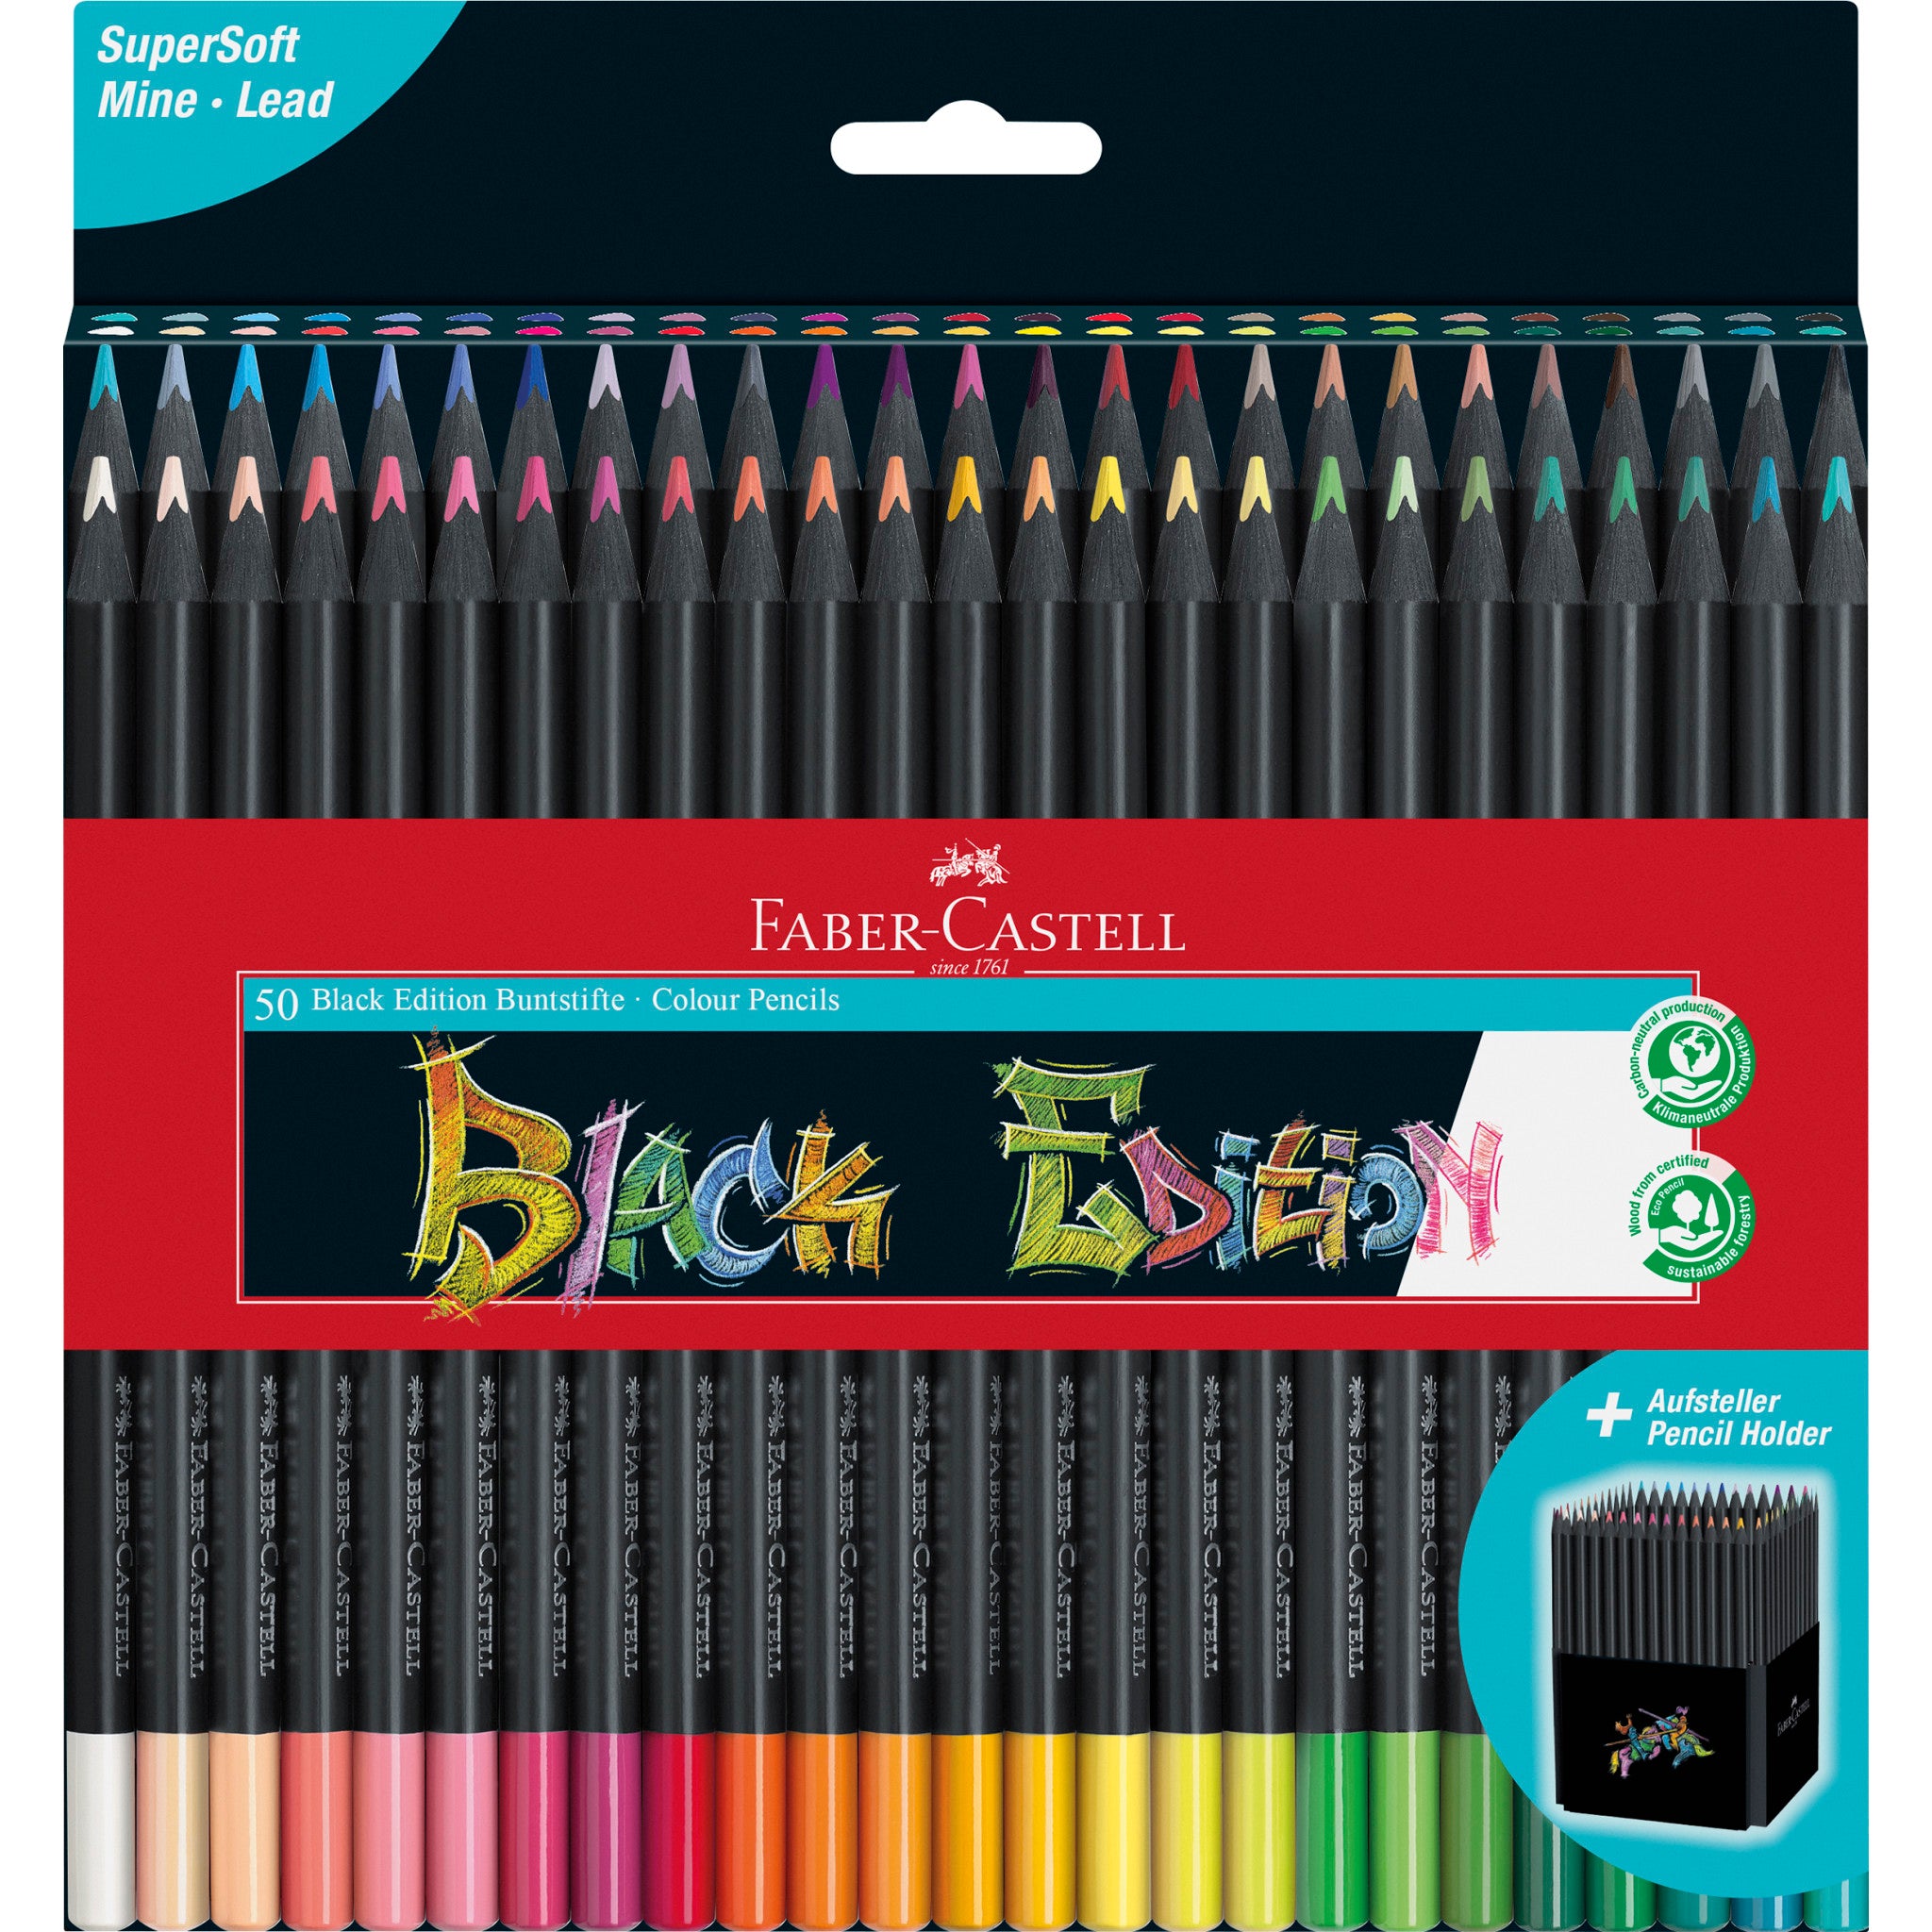 Faber-Castell Colour Pencil Polychromos wood case of 120